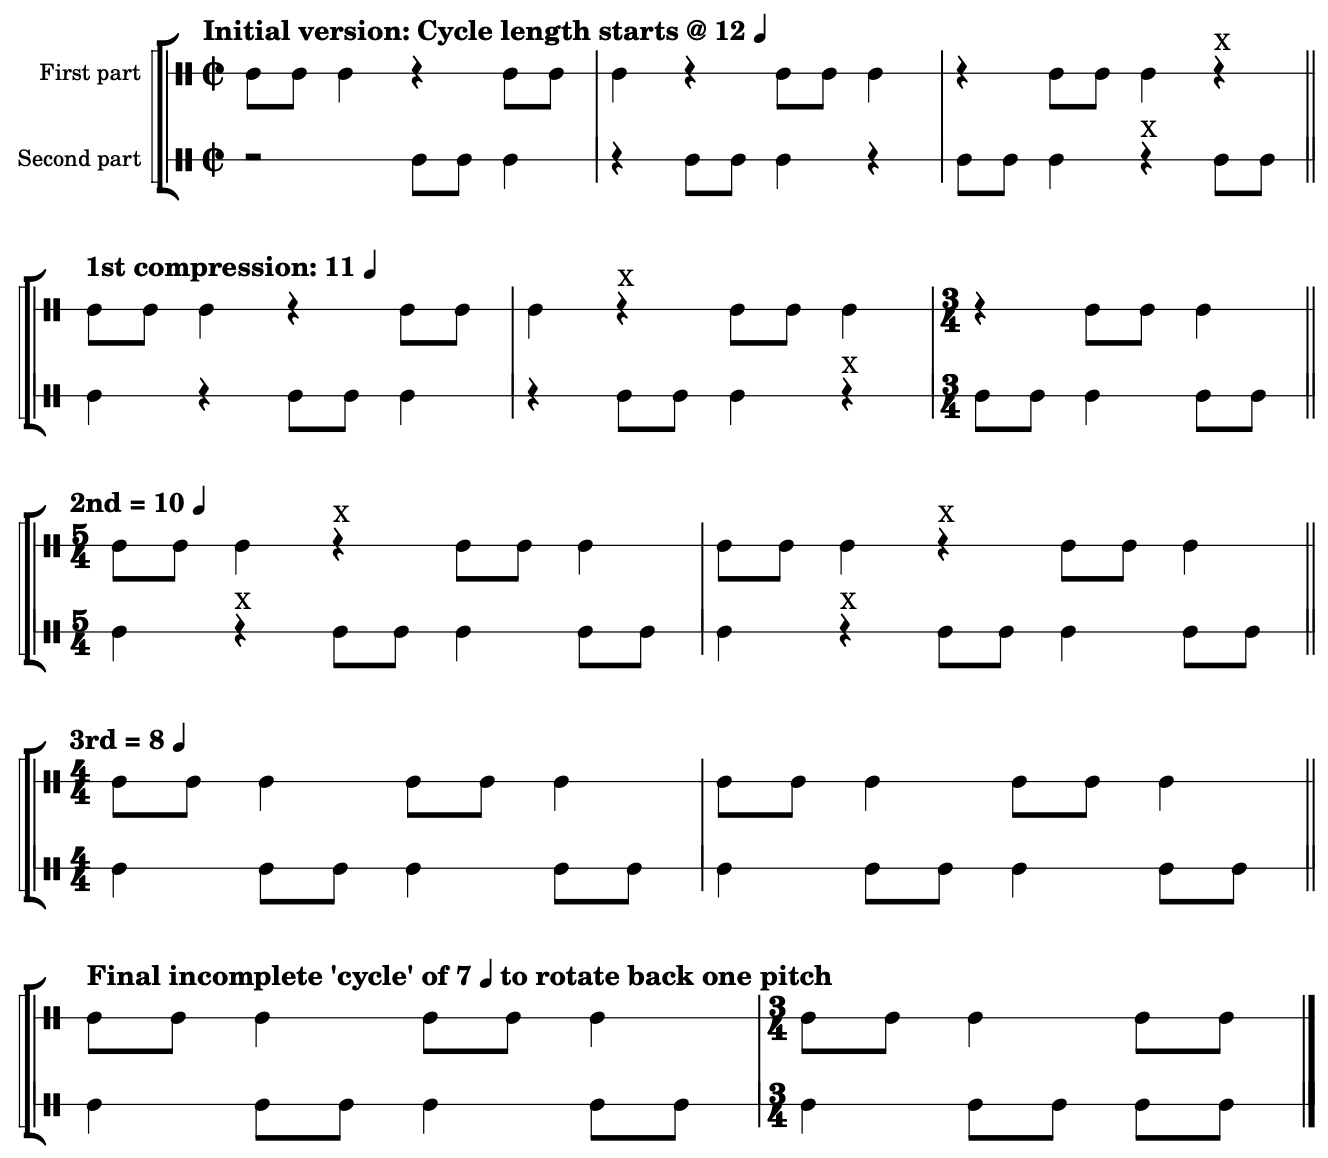 Rhythmic cycles with progressive compression